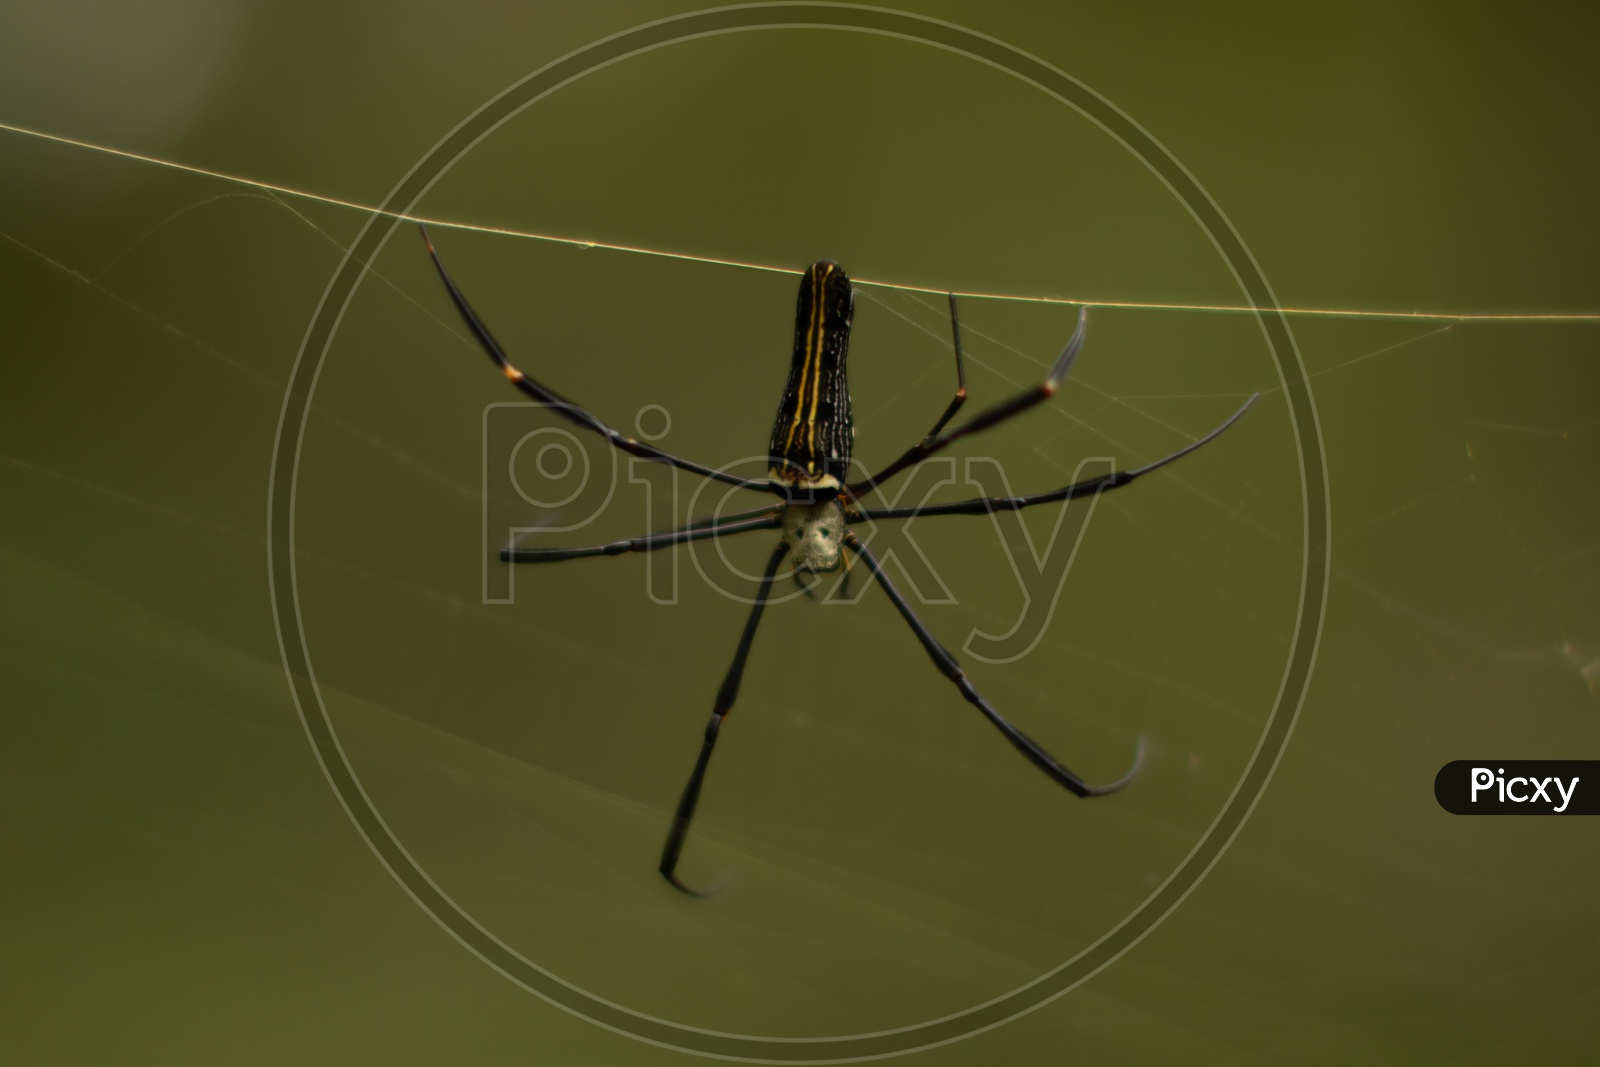 A Black Spider on its Web Closeup Shot